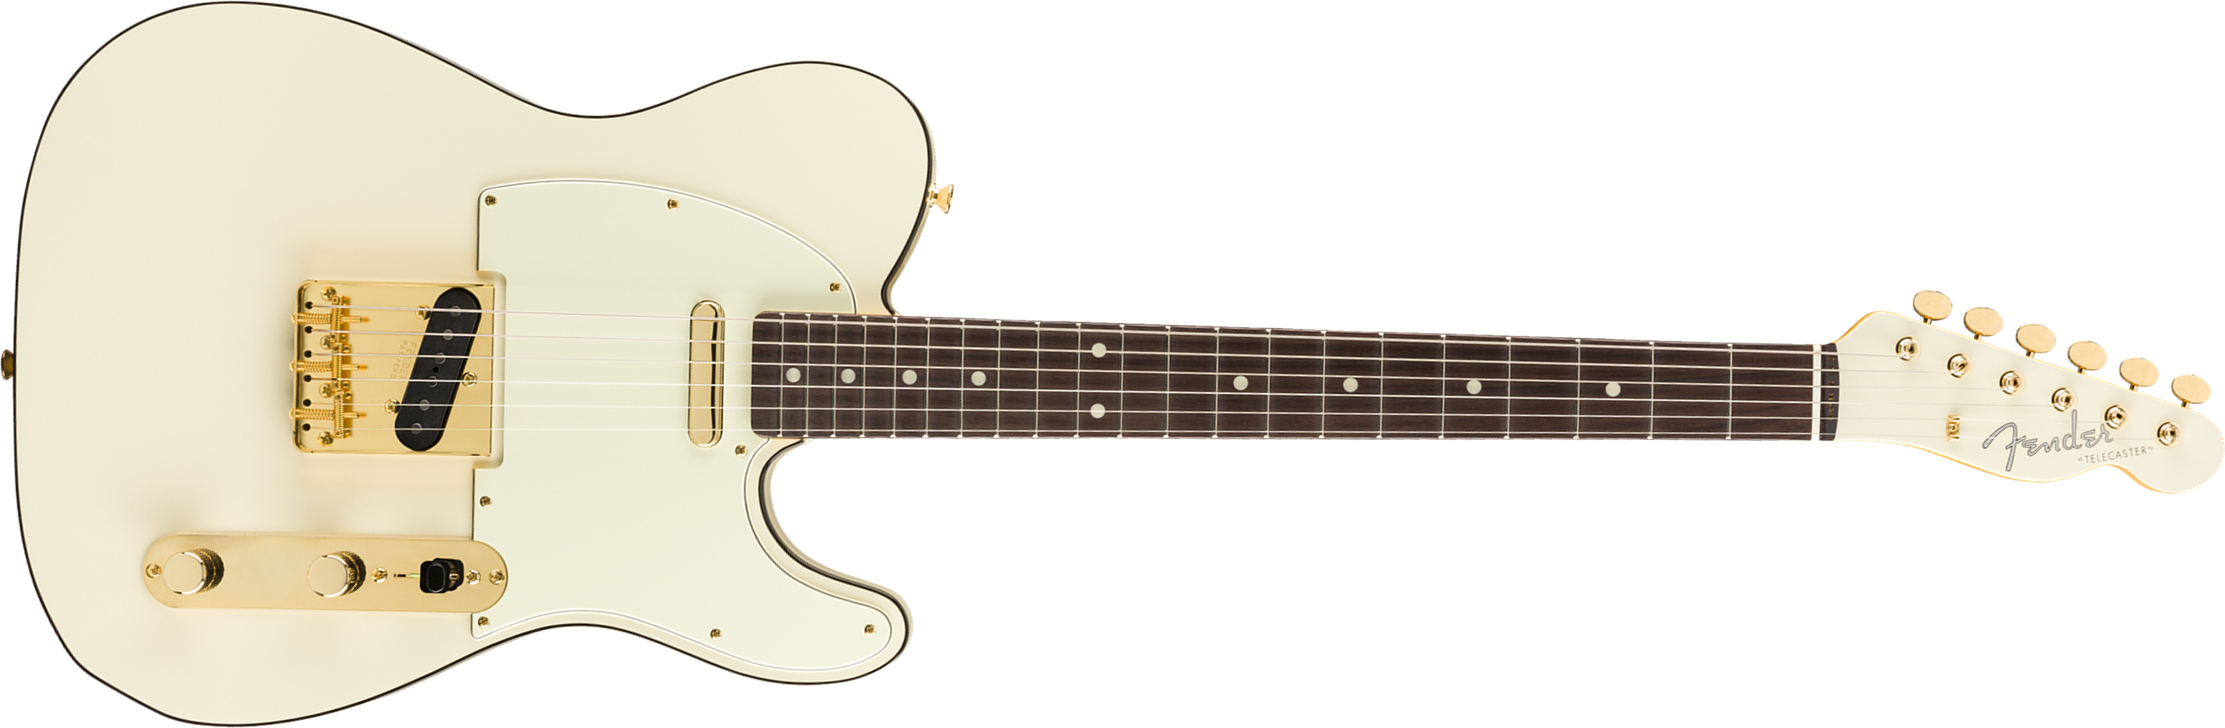 Fender Tele Daybreak Ltd 2019 Japon Gh Rw - Olympic White - Guitarra eléctrica con forma de tel - Main picture